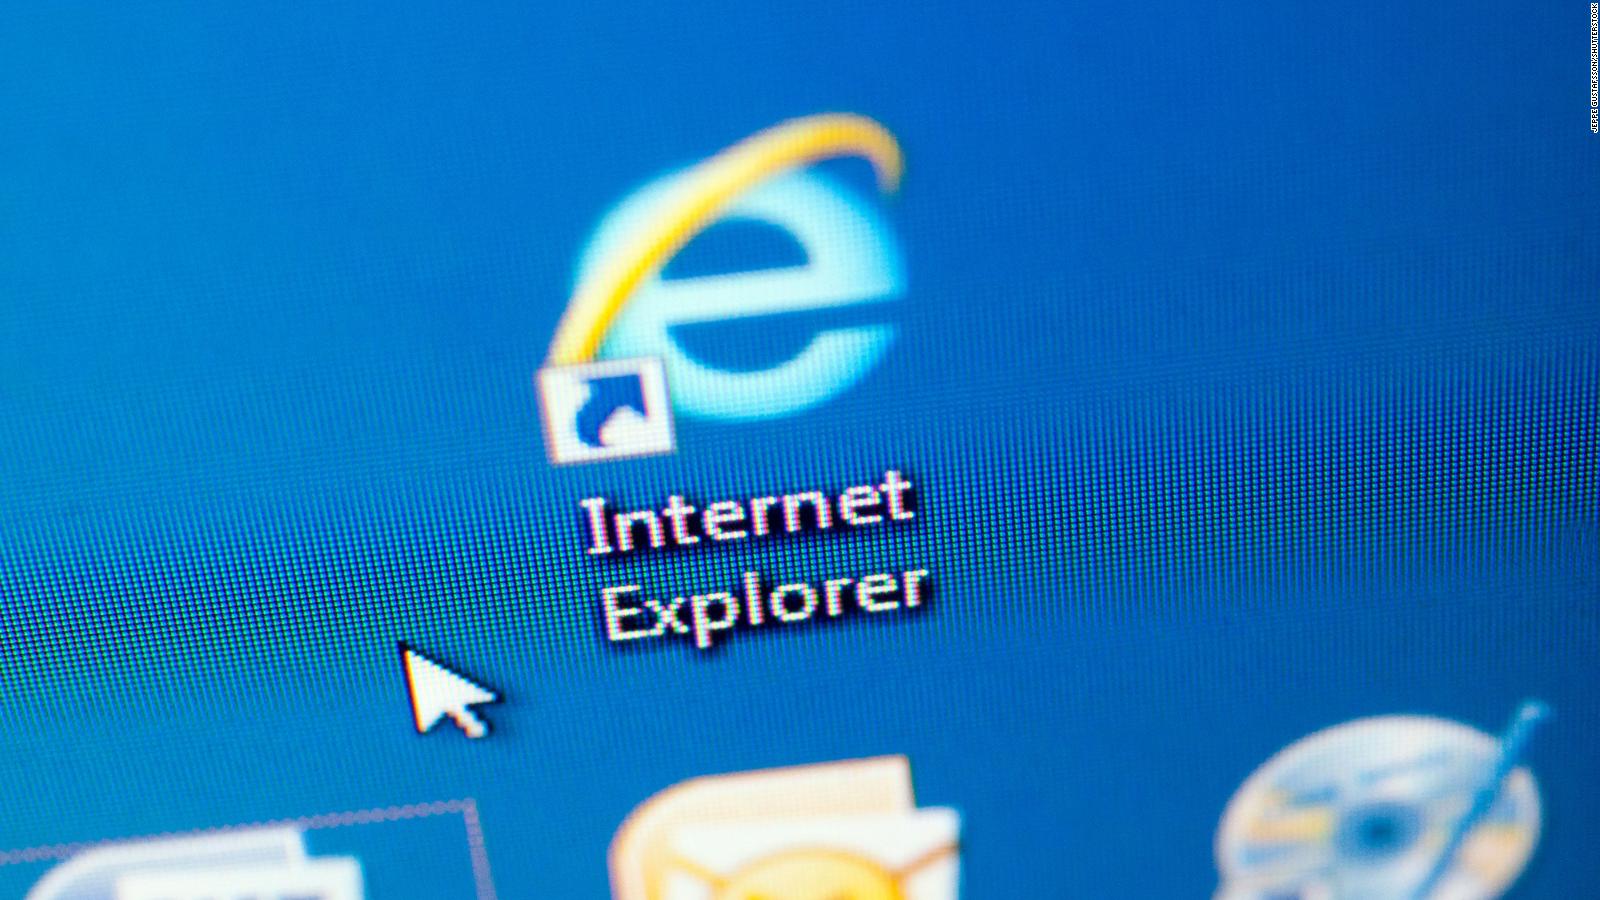 The end of an era: Microsoft retires Internet Explorer